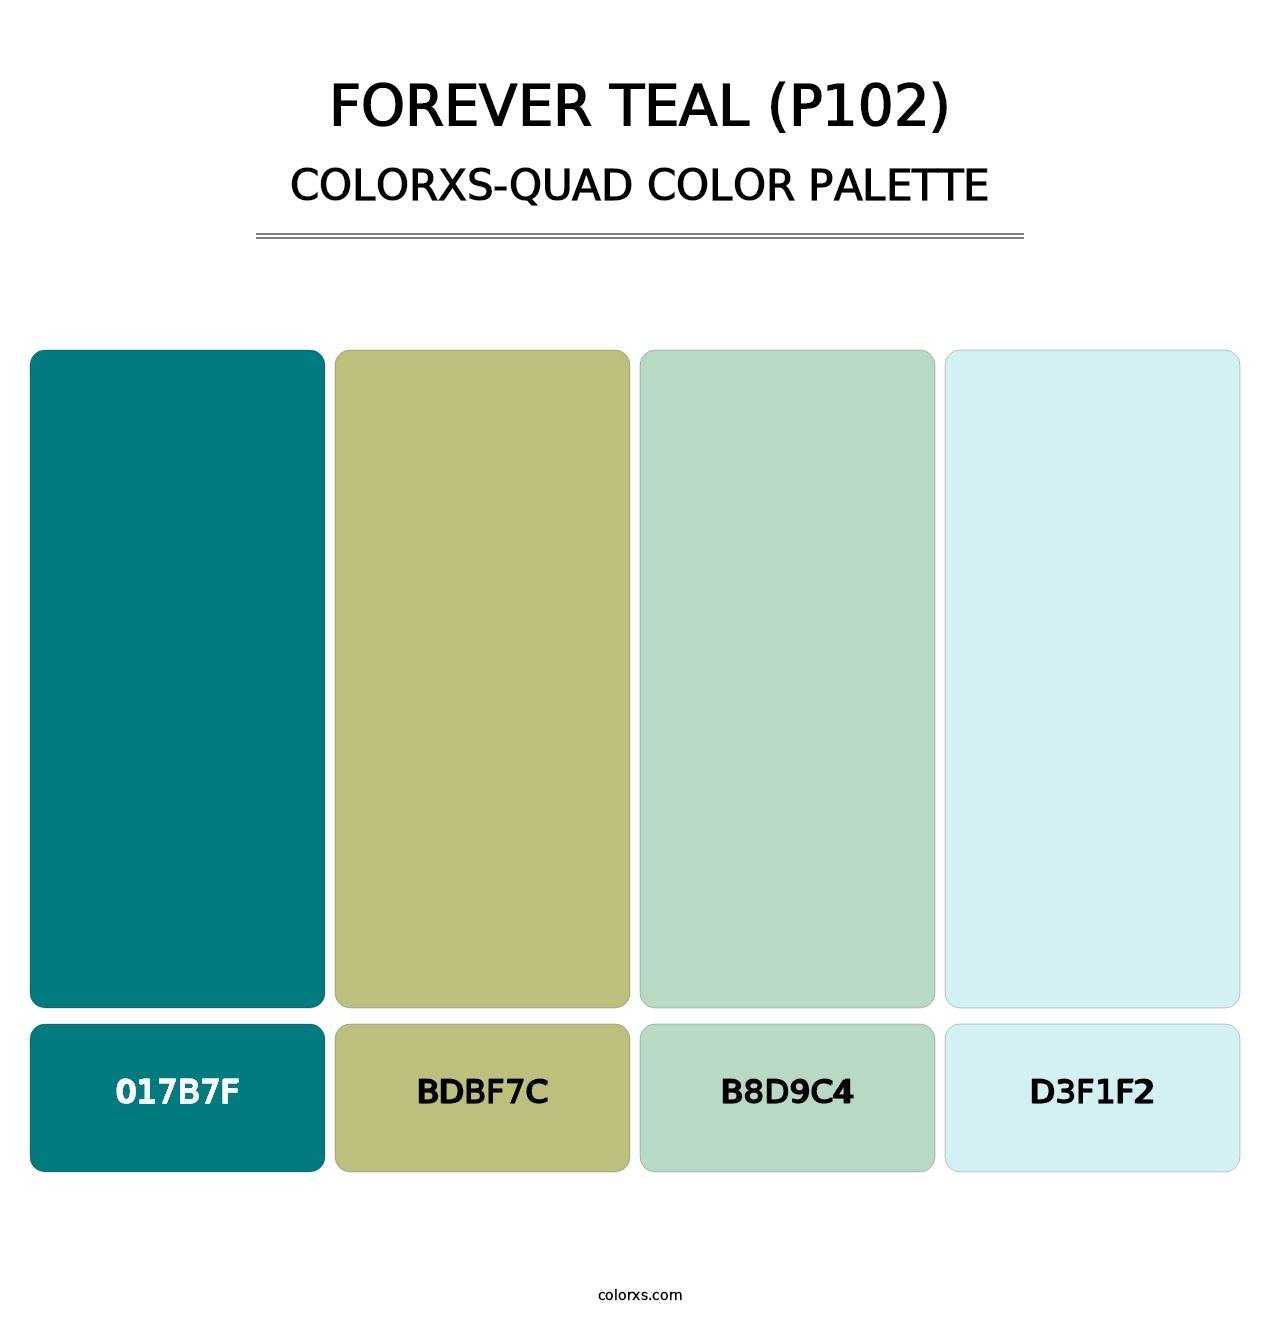 Forever Teal (P102) - Colorxs Quad Palette